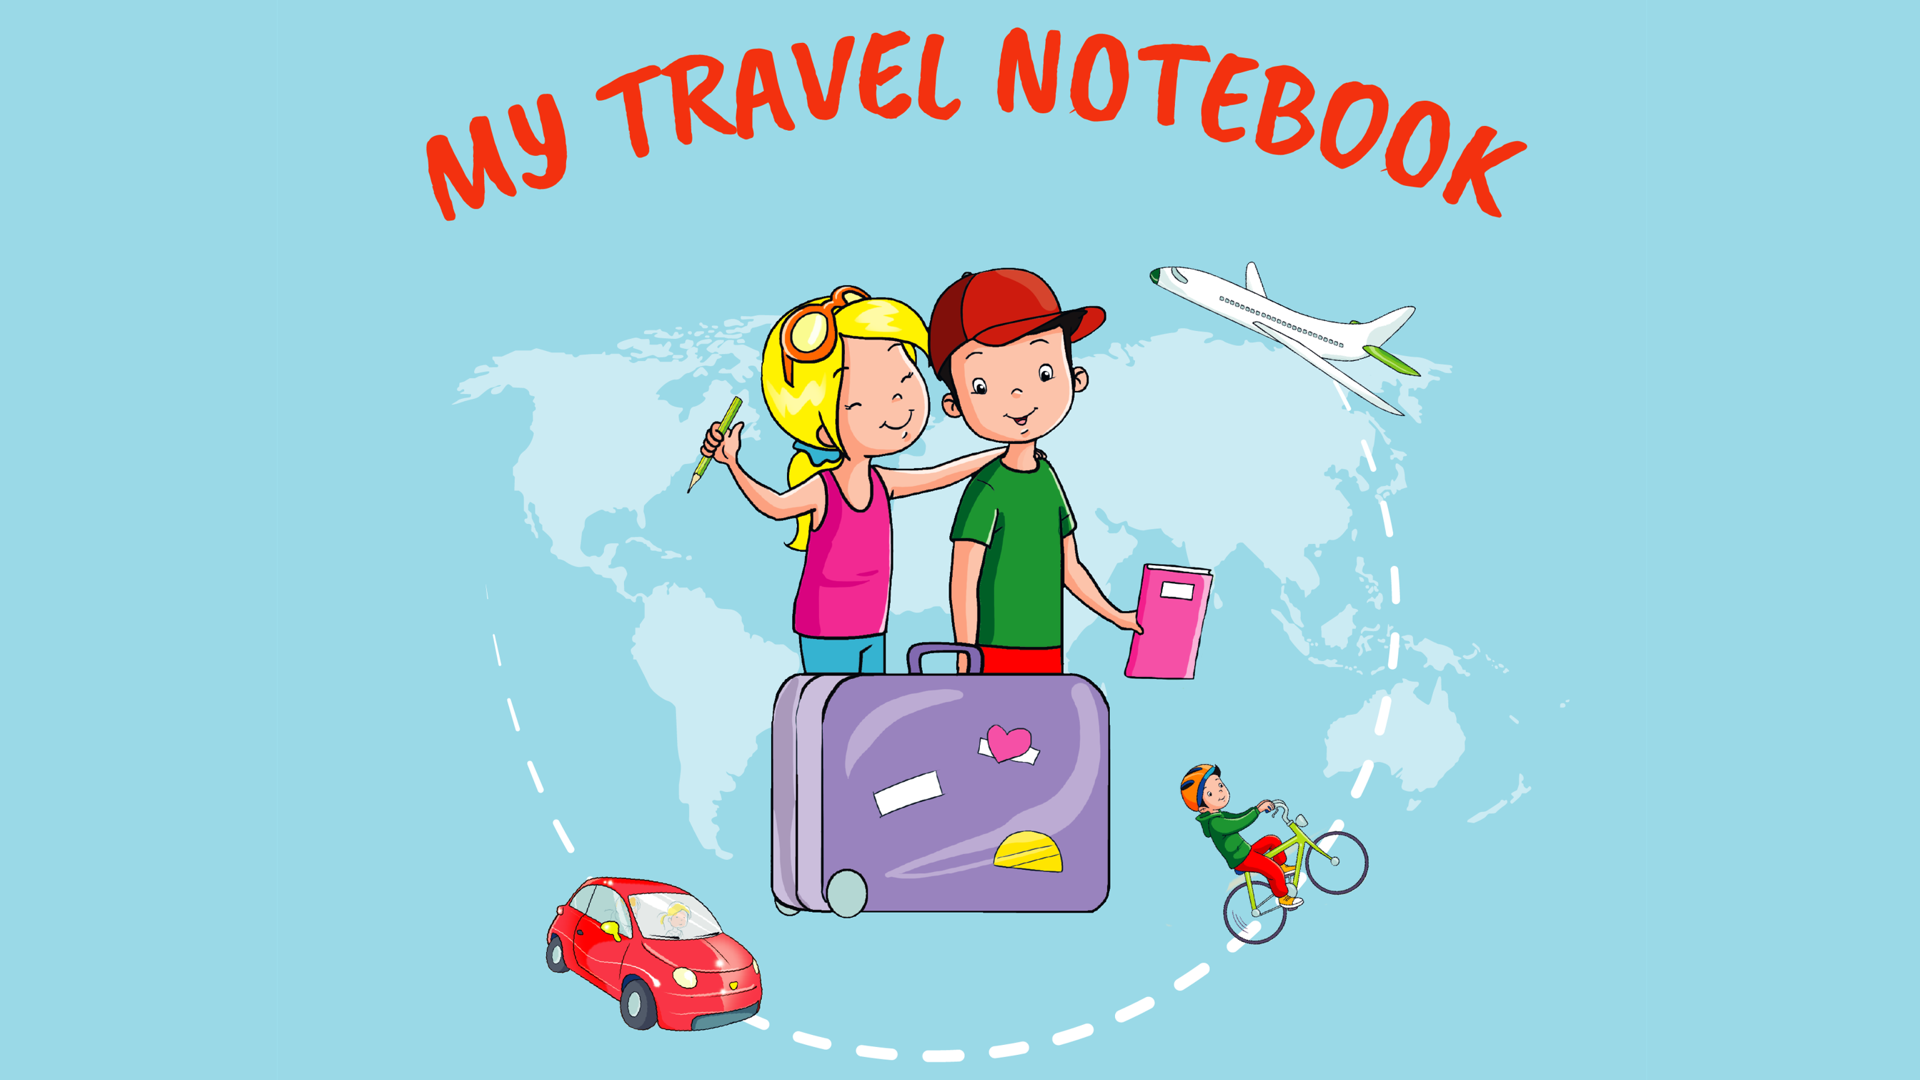 My travel notebook